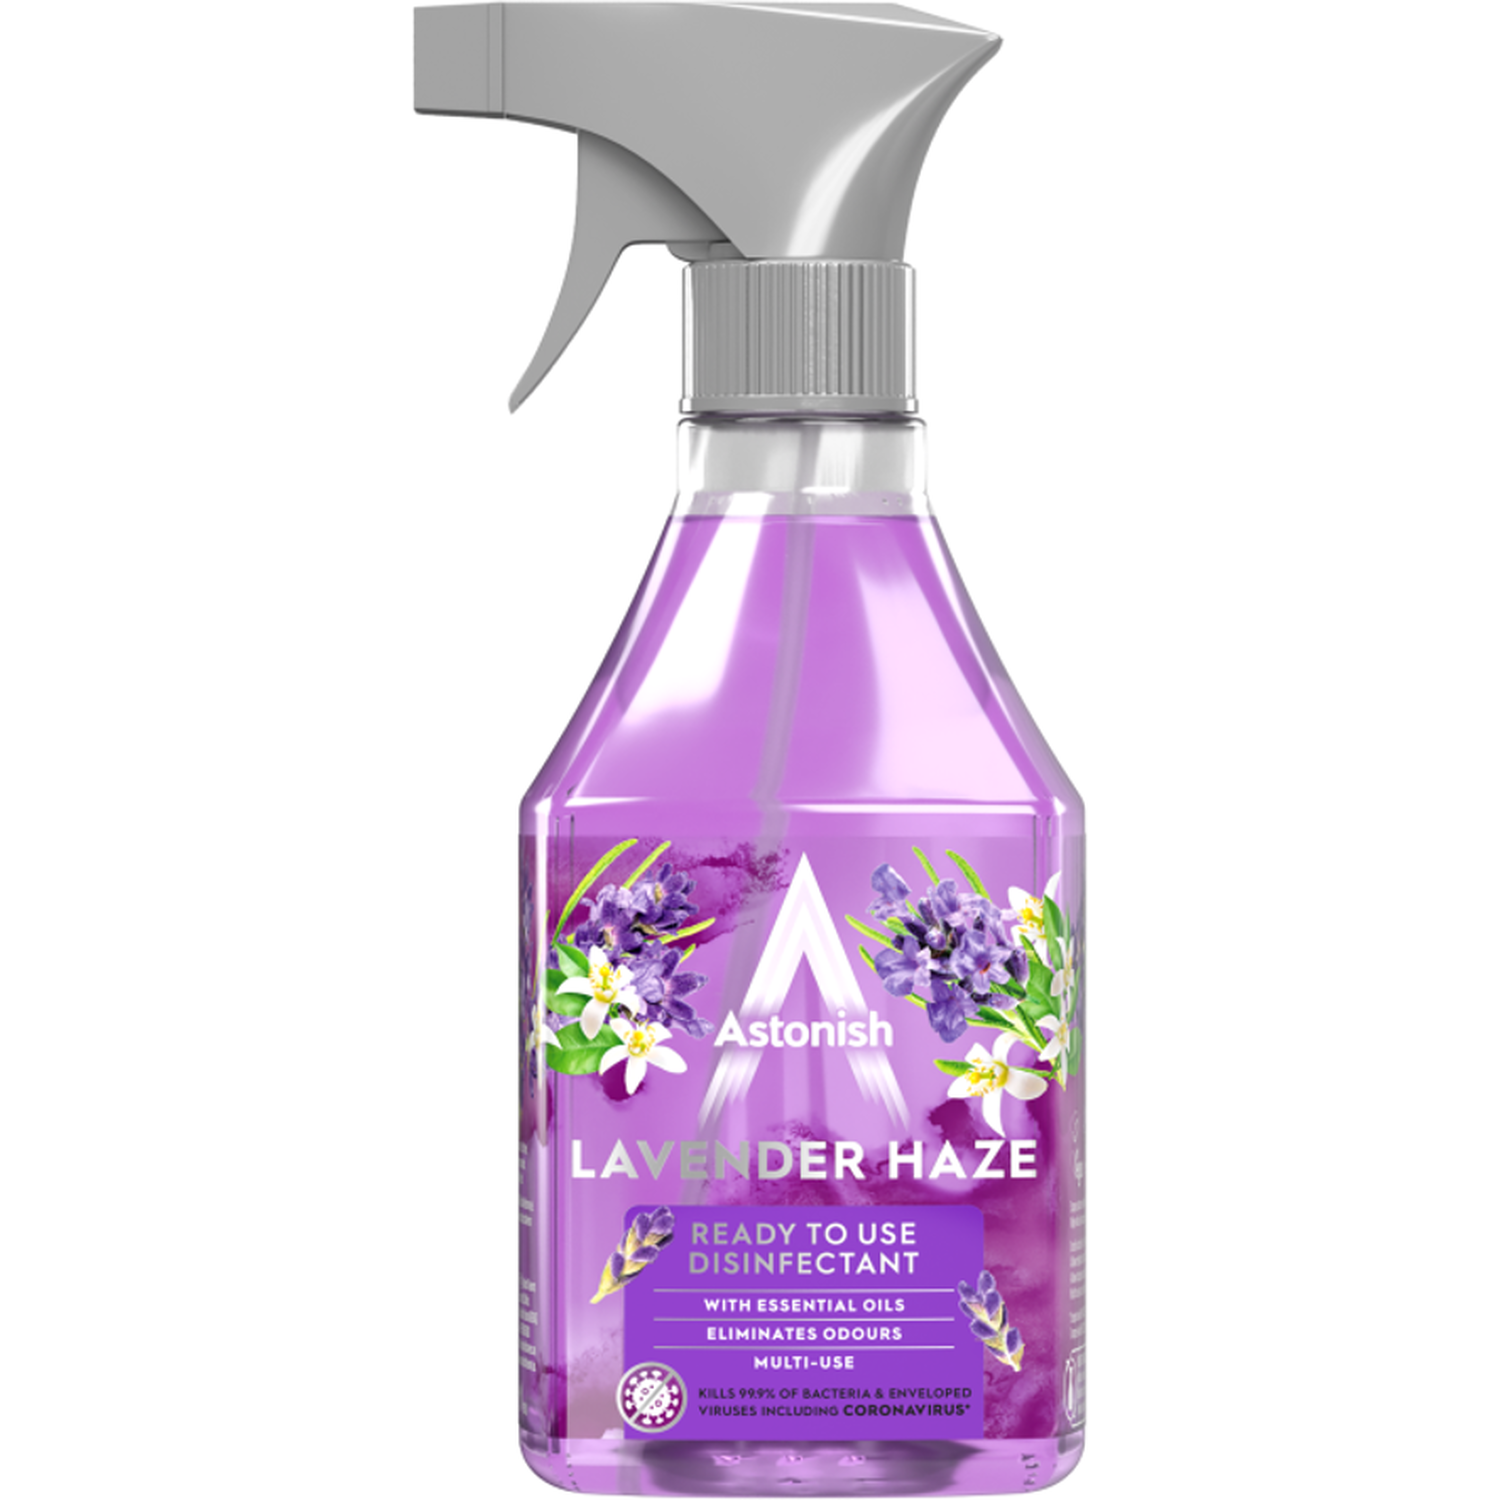 Astonish Ready to Use Disinfectant - Lavender Haze Image